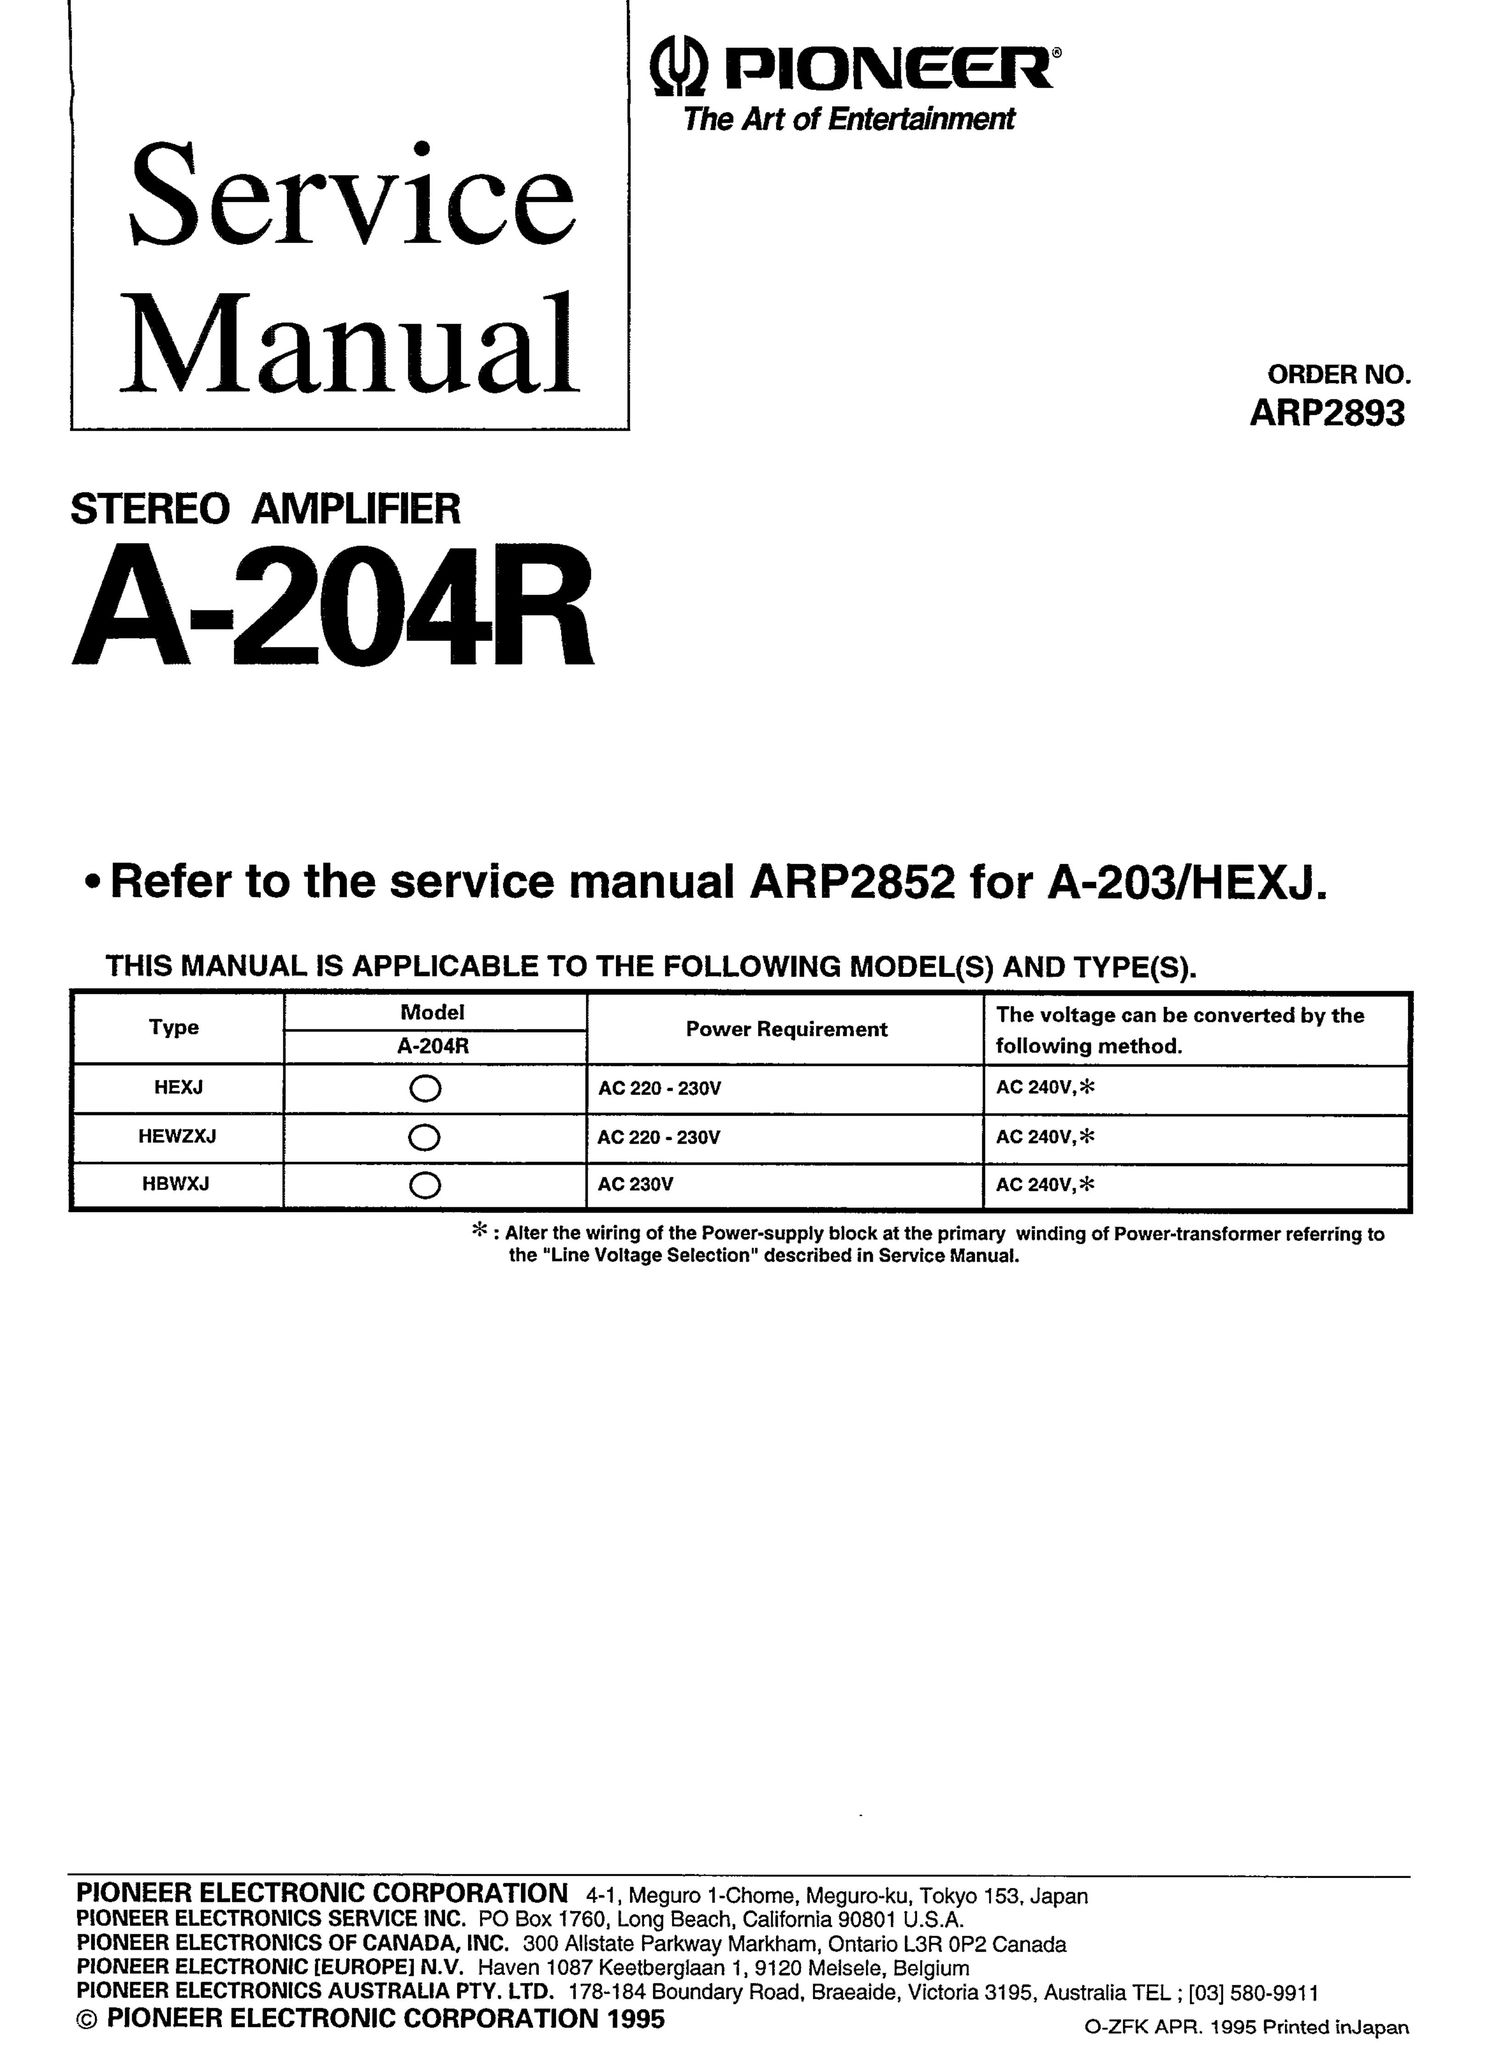 pioneer a 204 r service manual